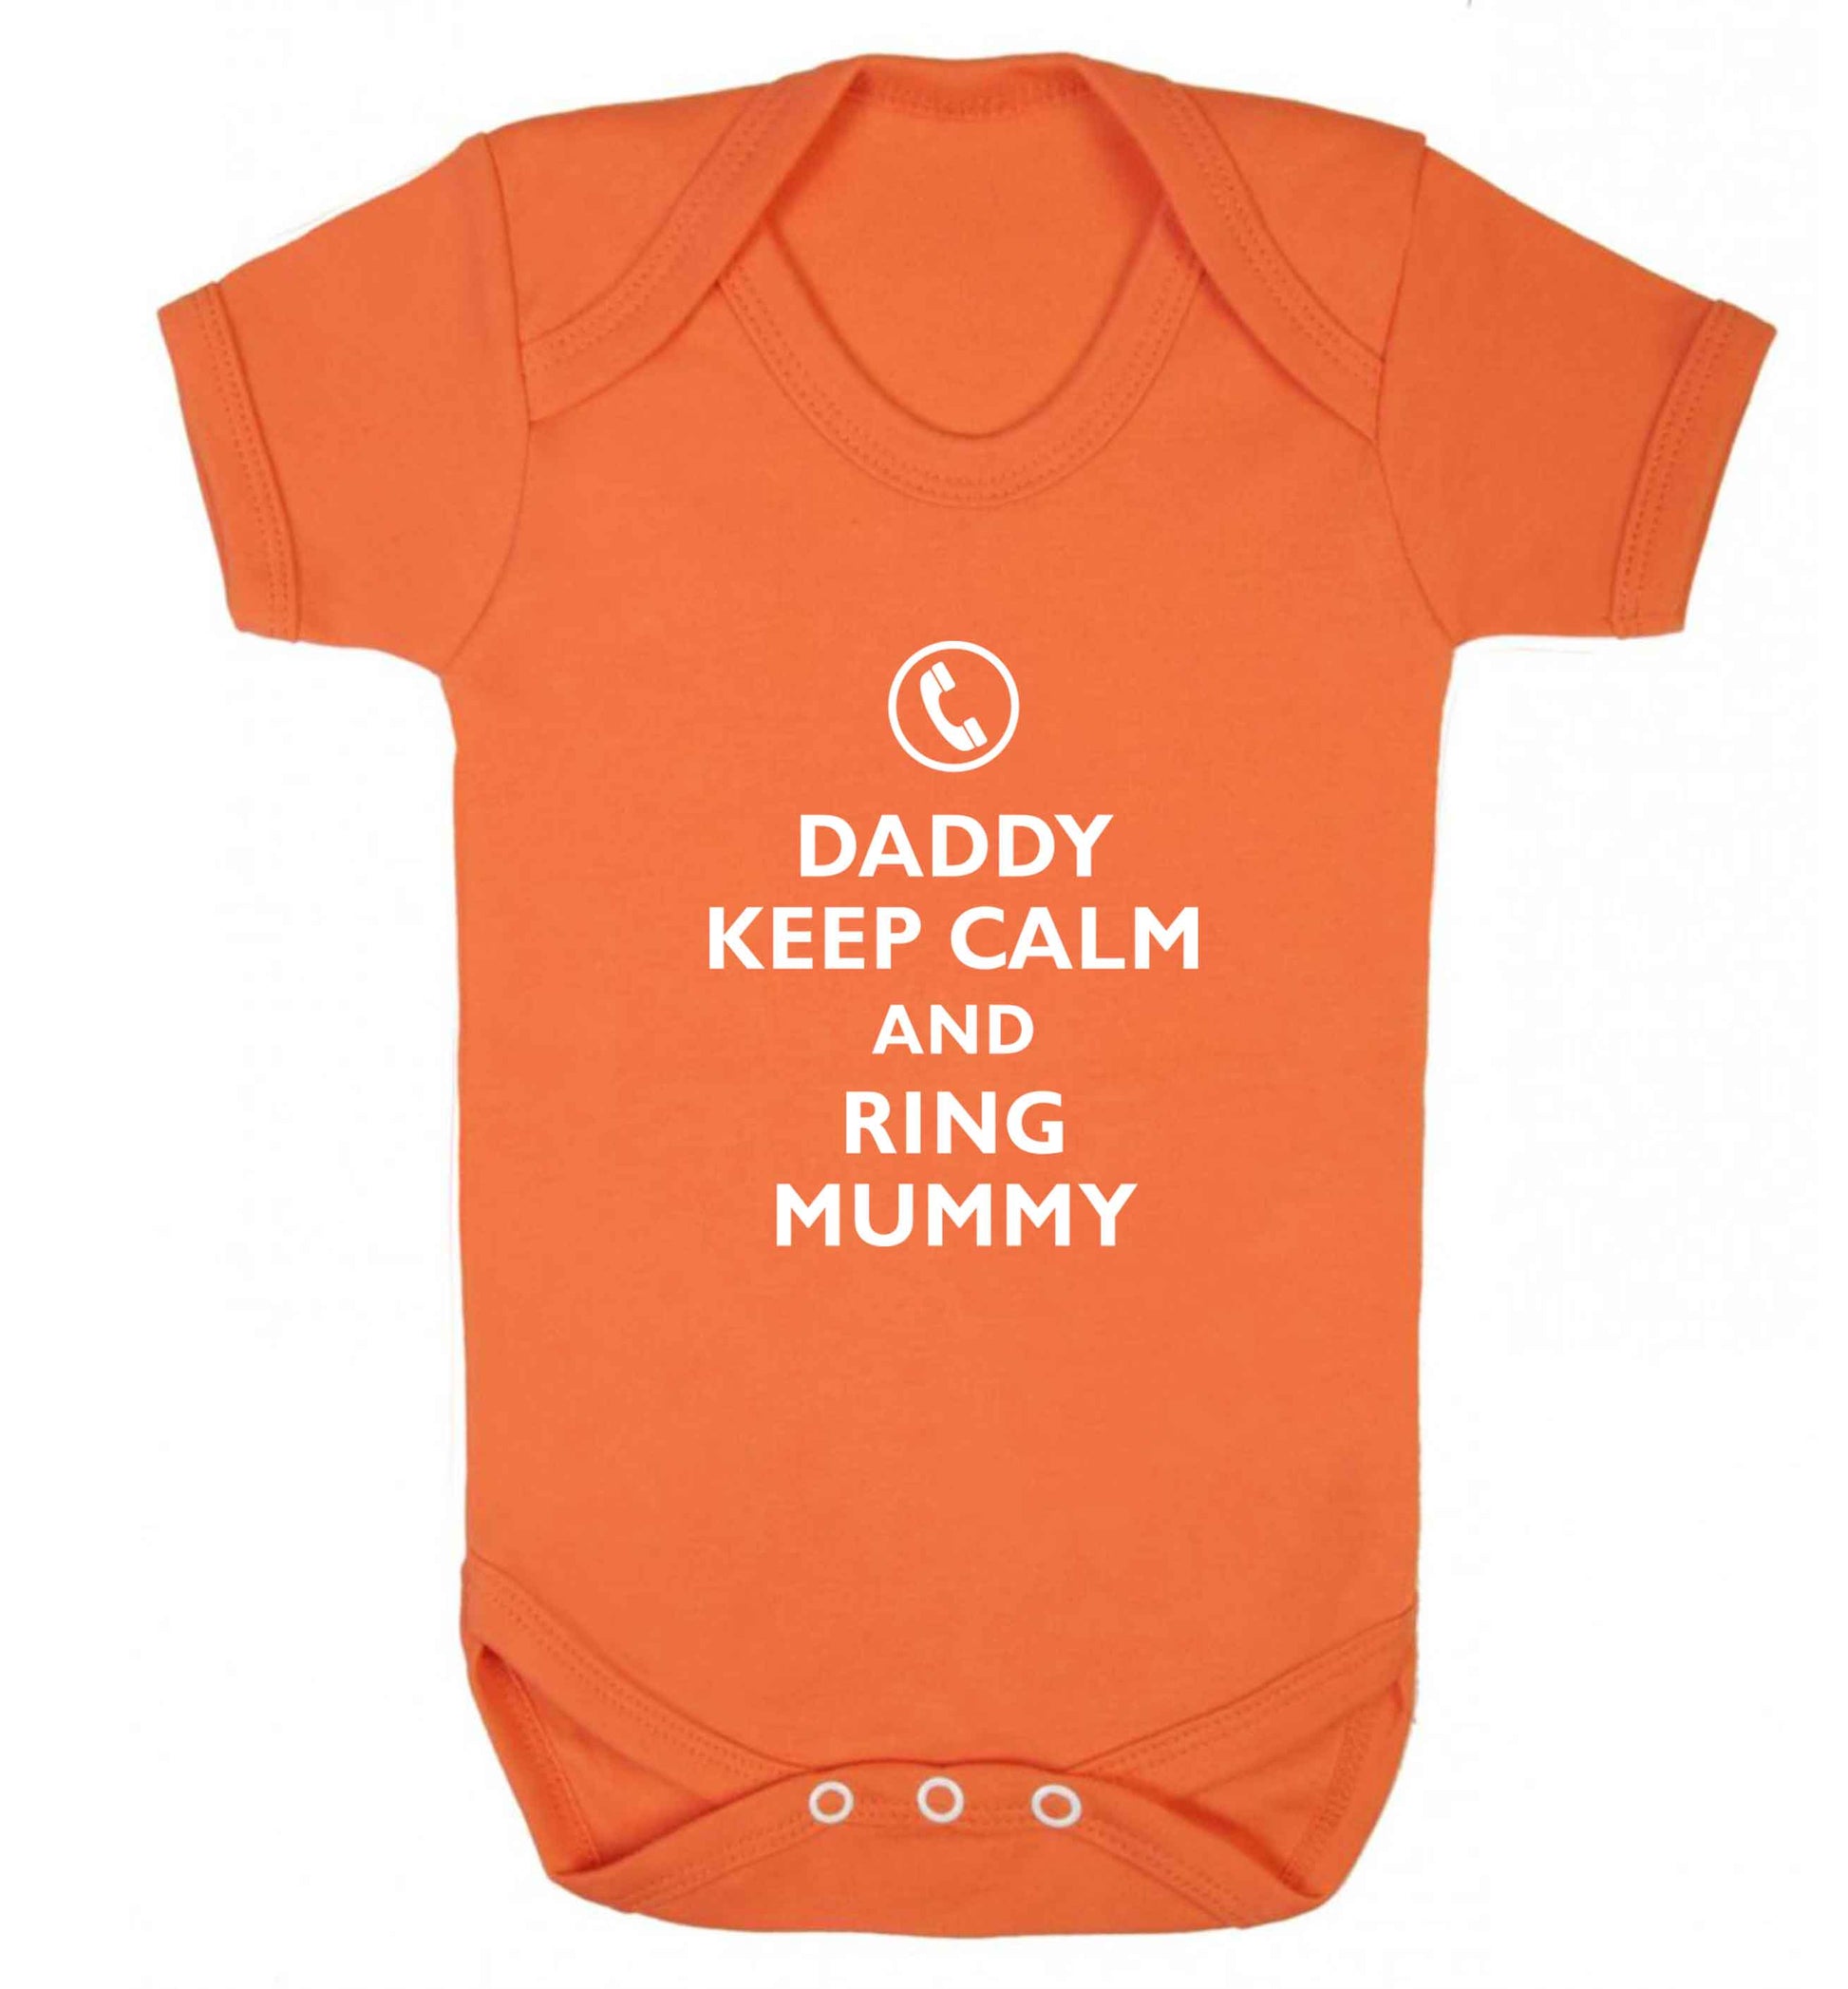 Daddy keep calm and ring mummy baby vest orange 18-24 months